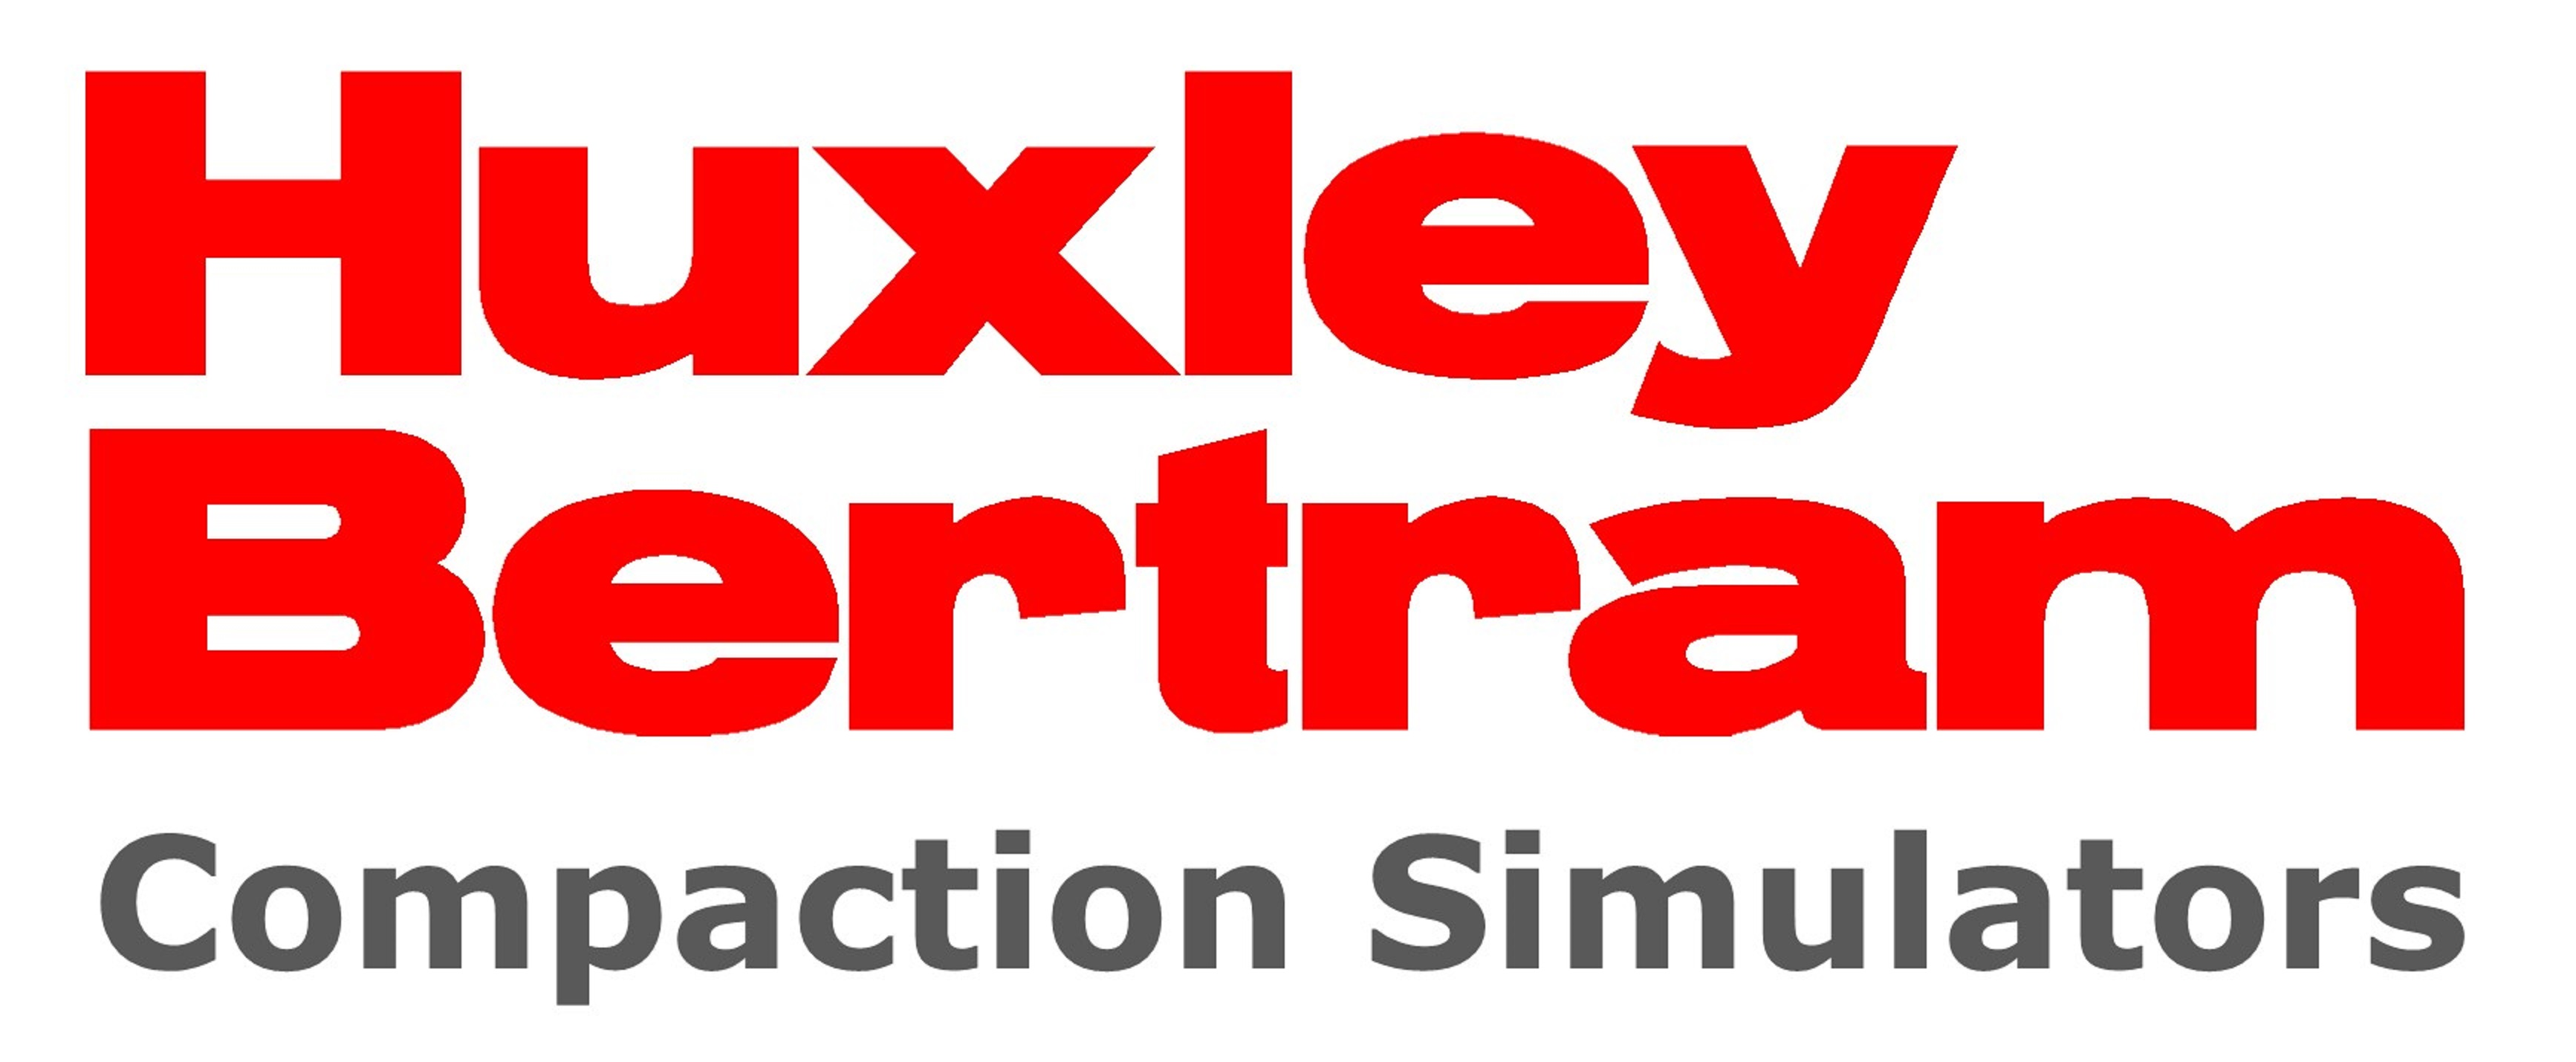 Huxley Bertram HB100 High Speed Tablet Compaction Simulator